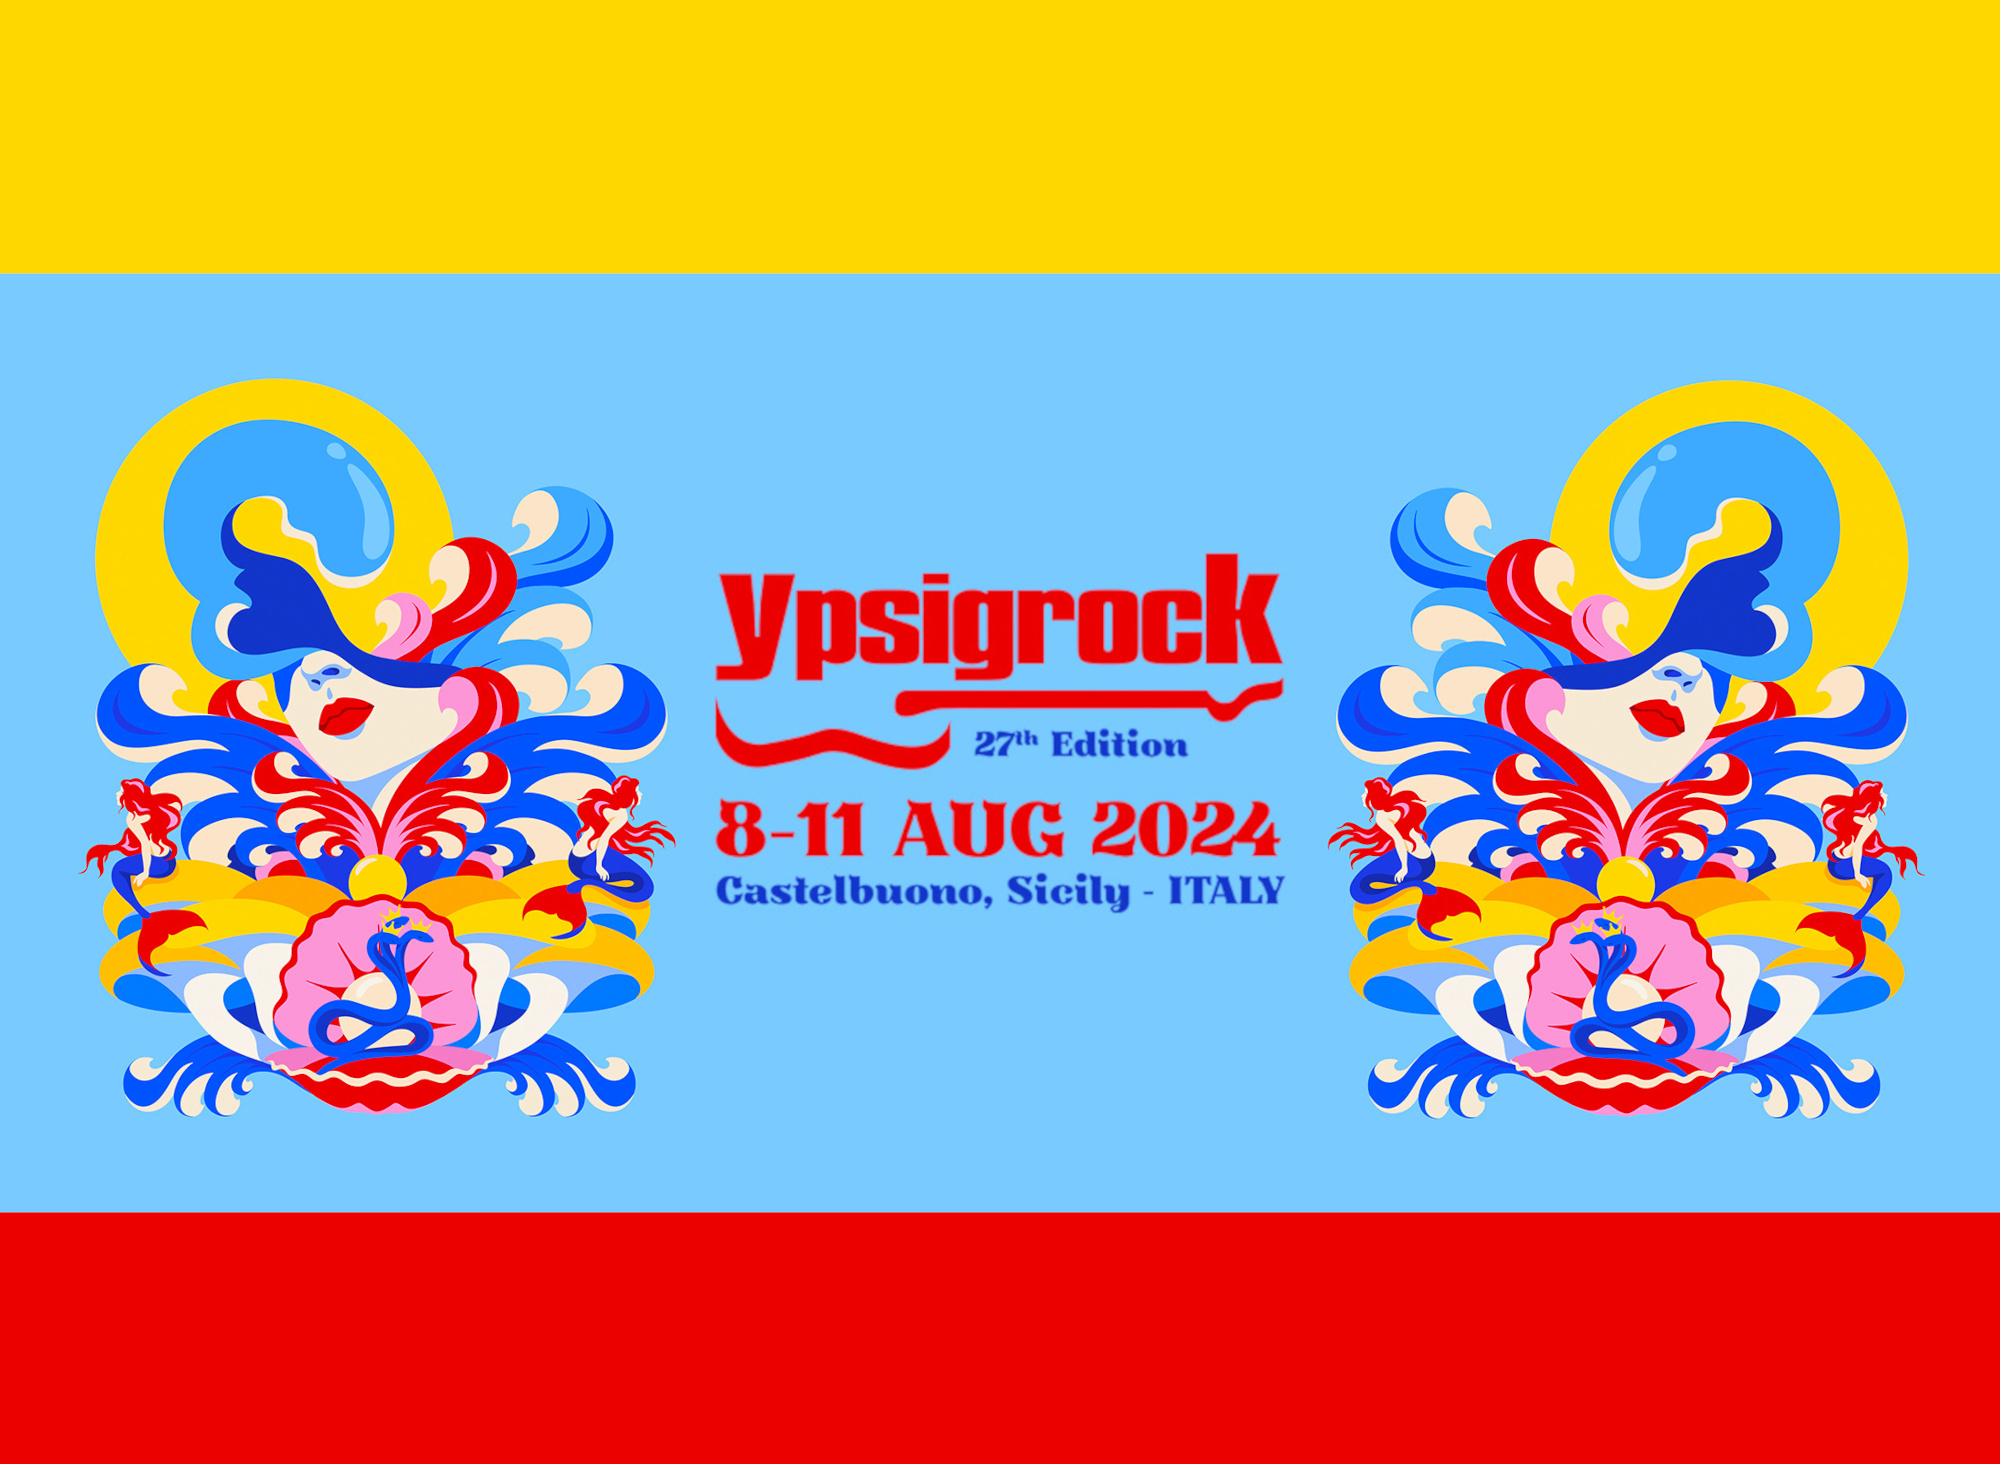 Ypsigrock Festival 2024